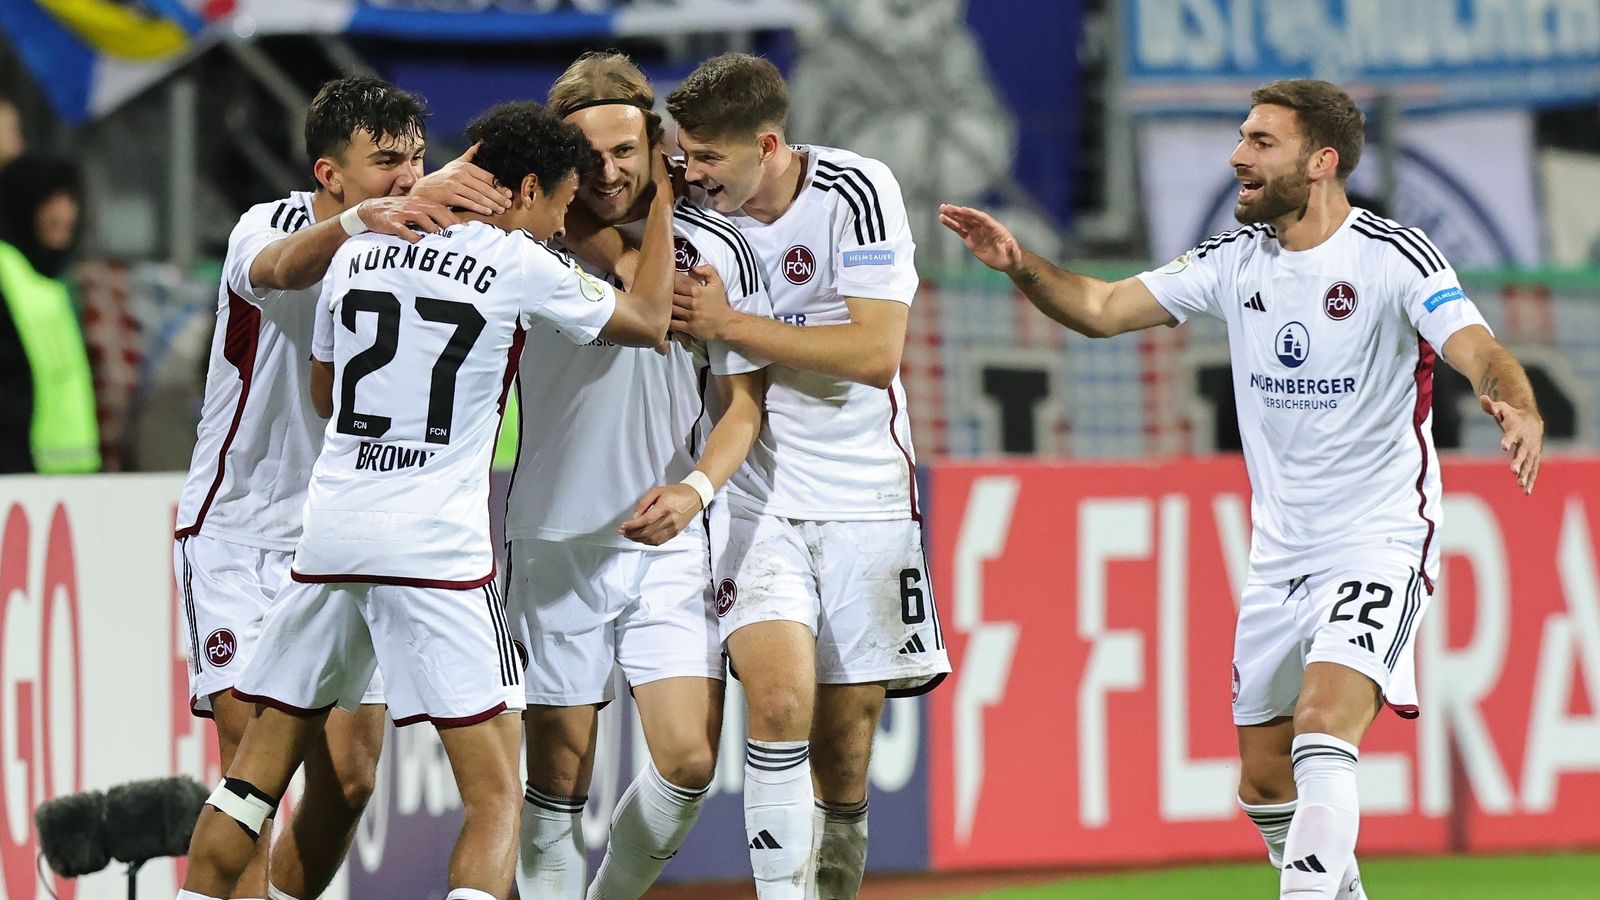 DFB-Pokal: Lohkemper schießt Nürnberg ins Achtelfinale